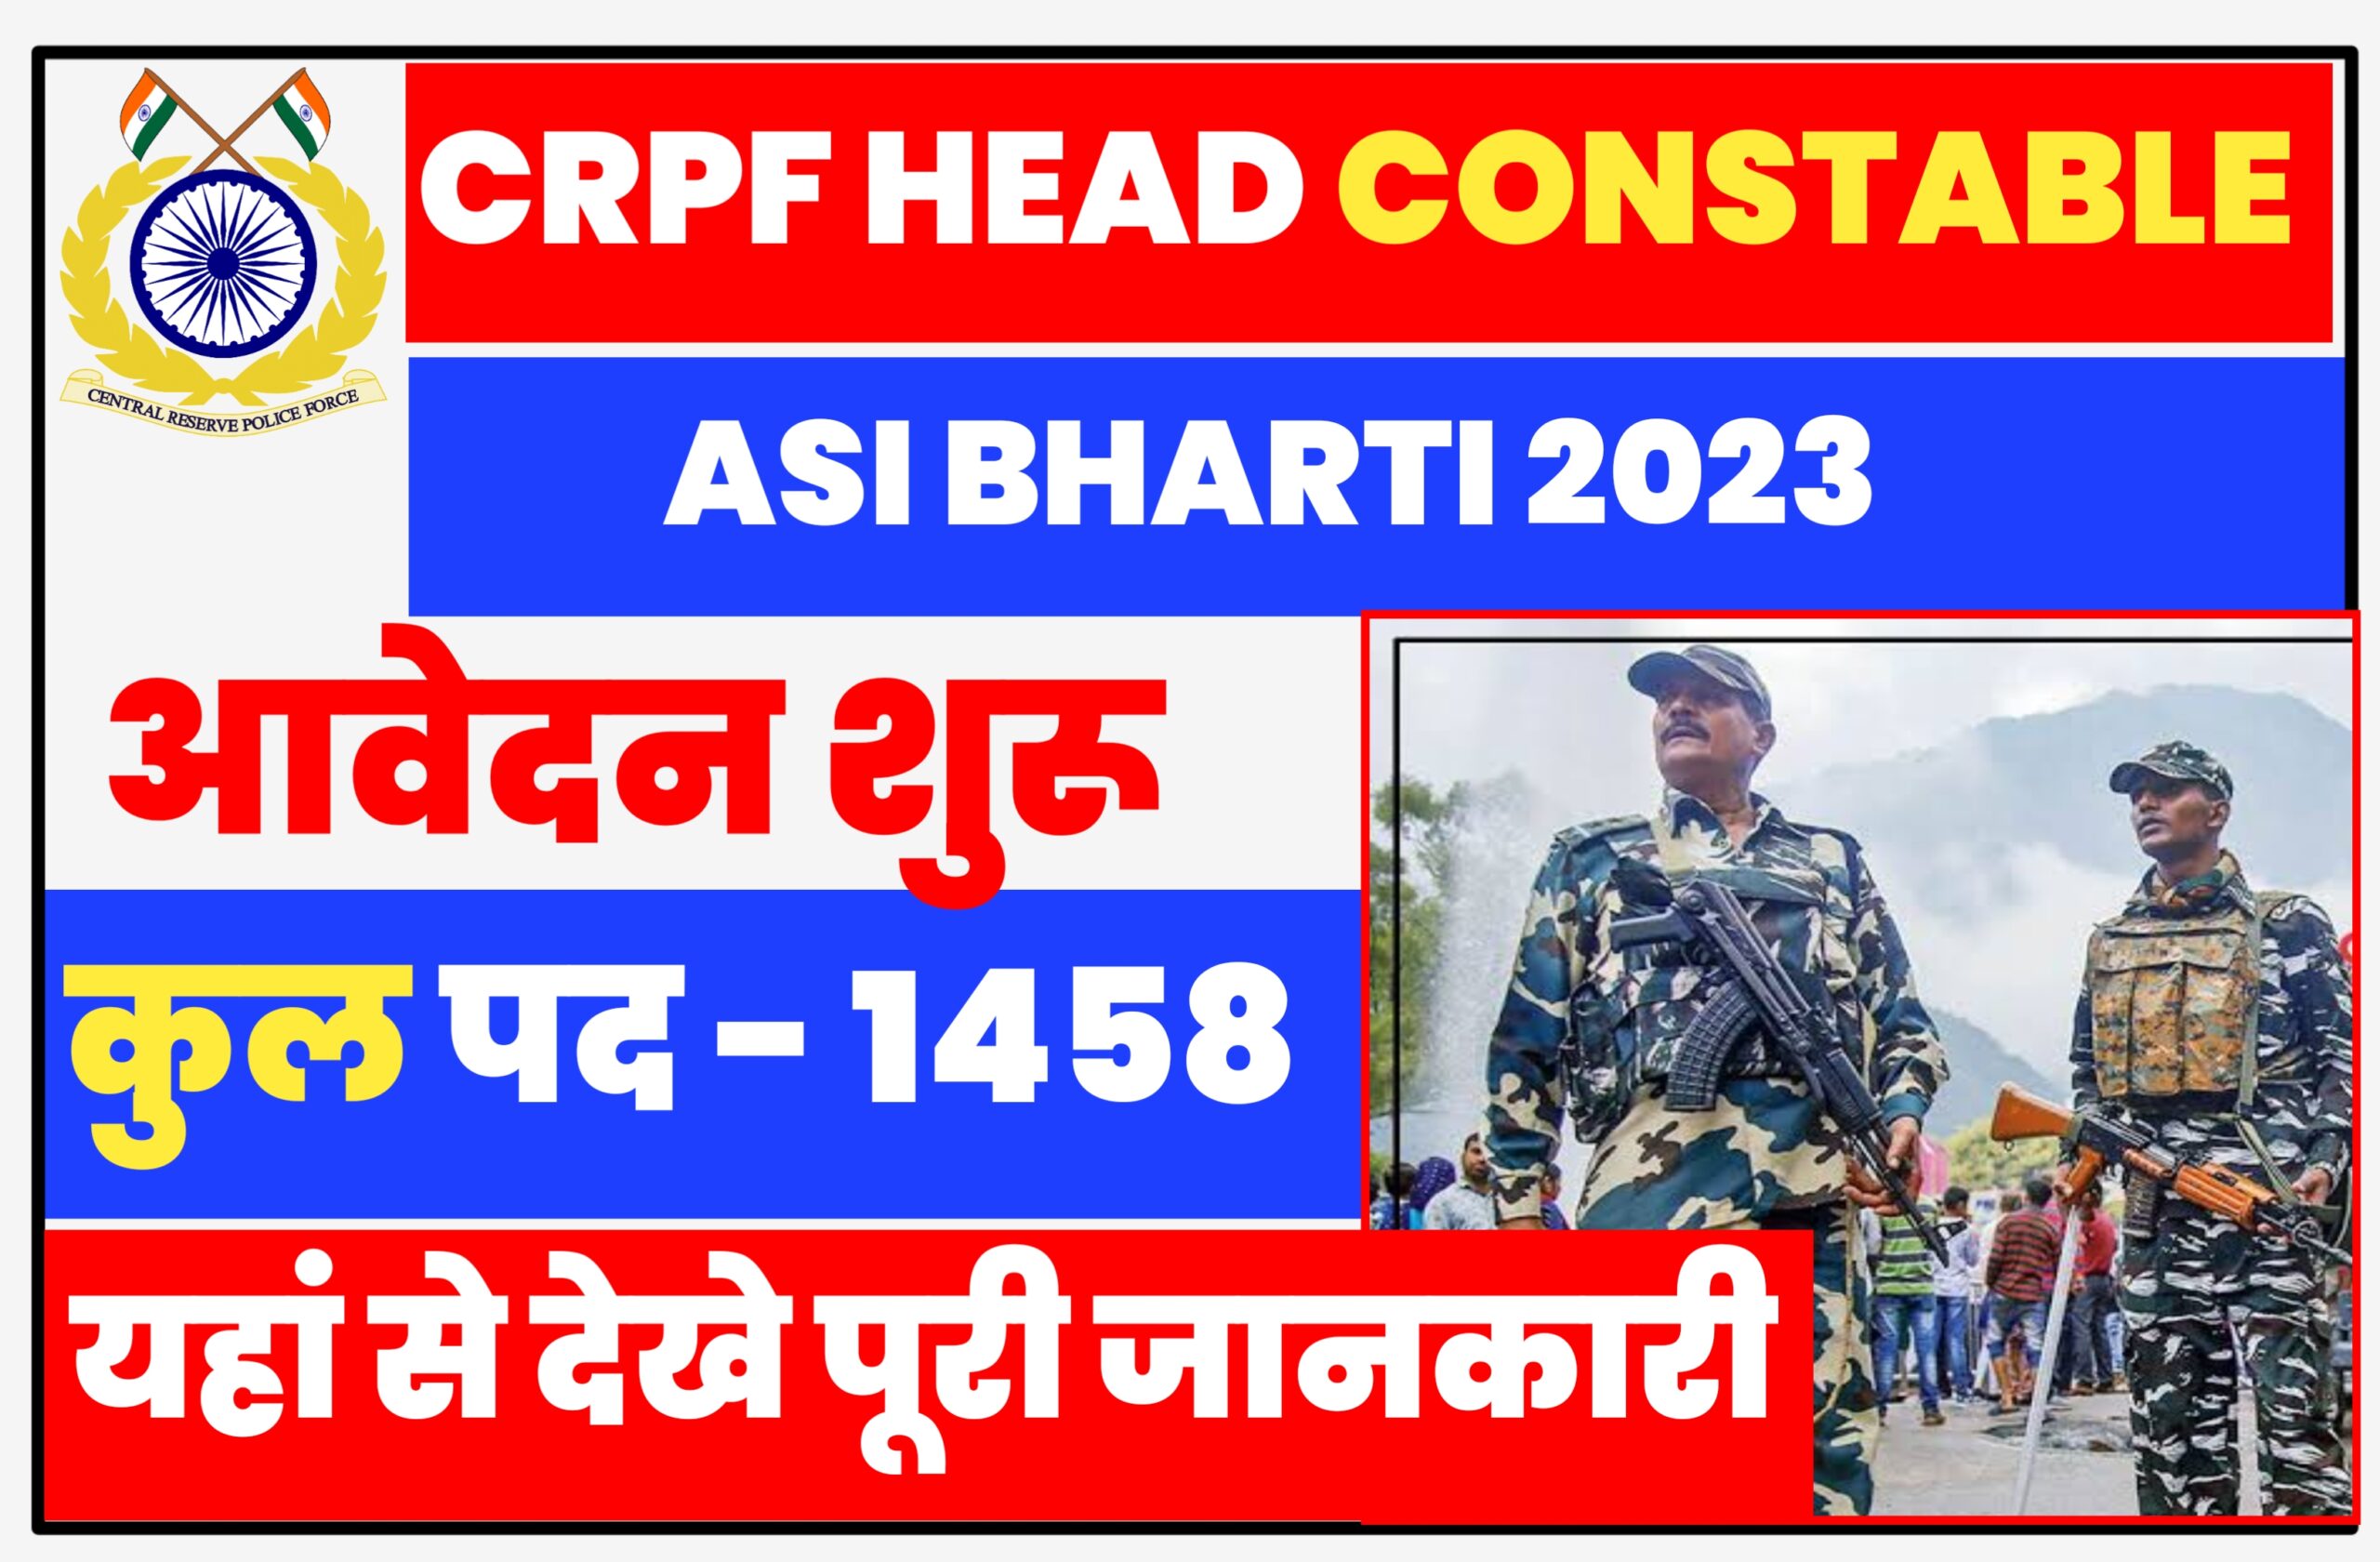 CRPF Head Constable ASI Recruitment 2023